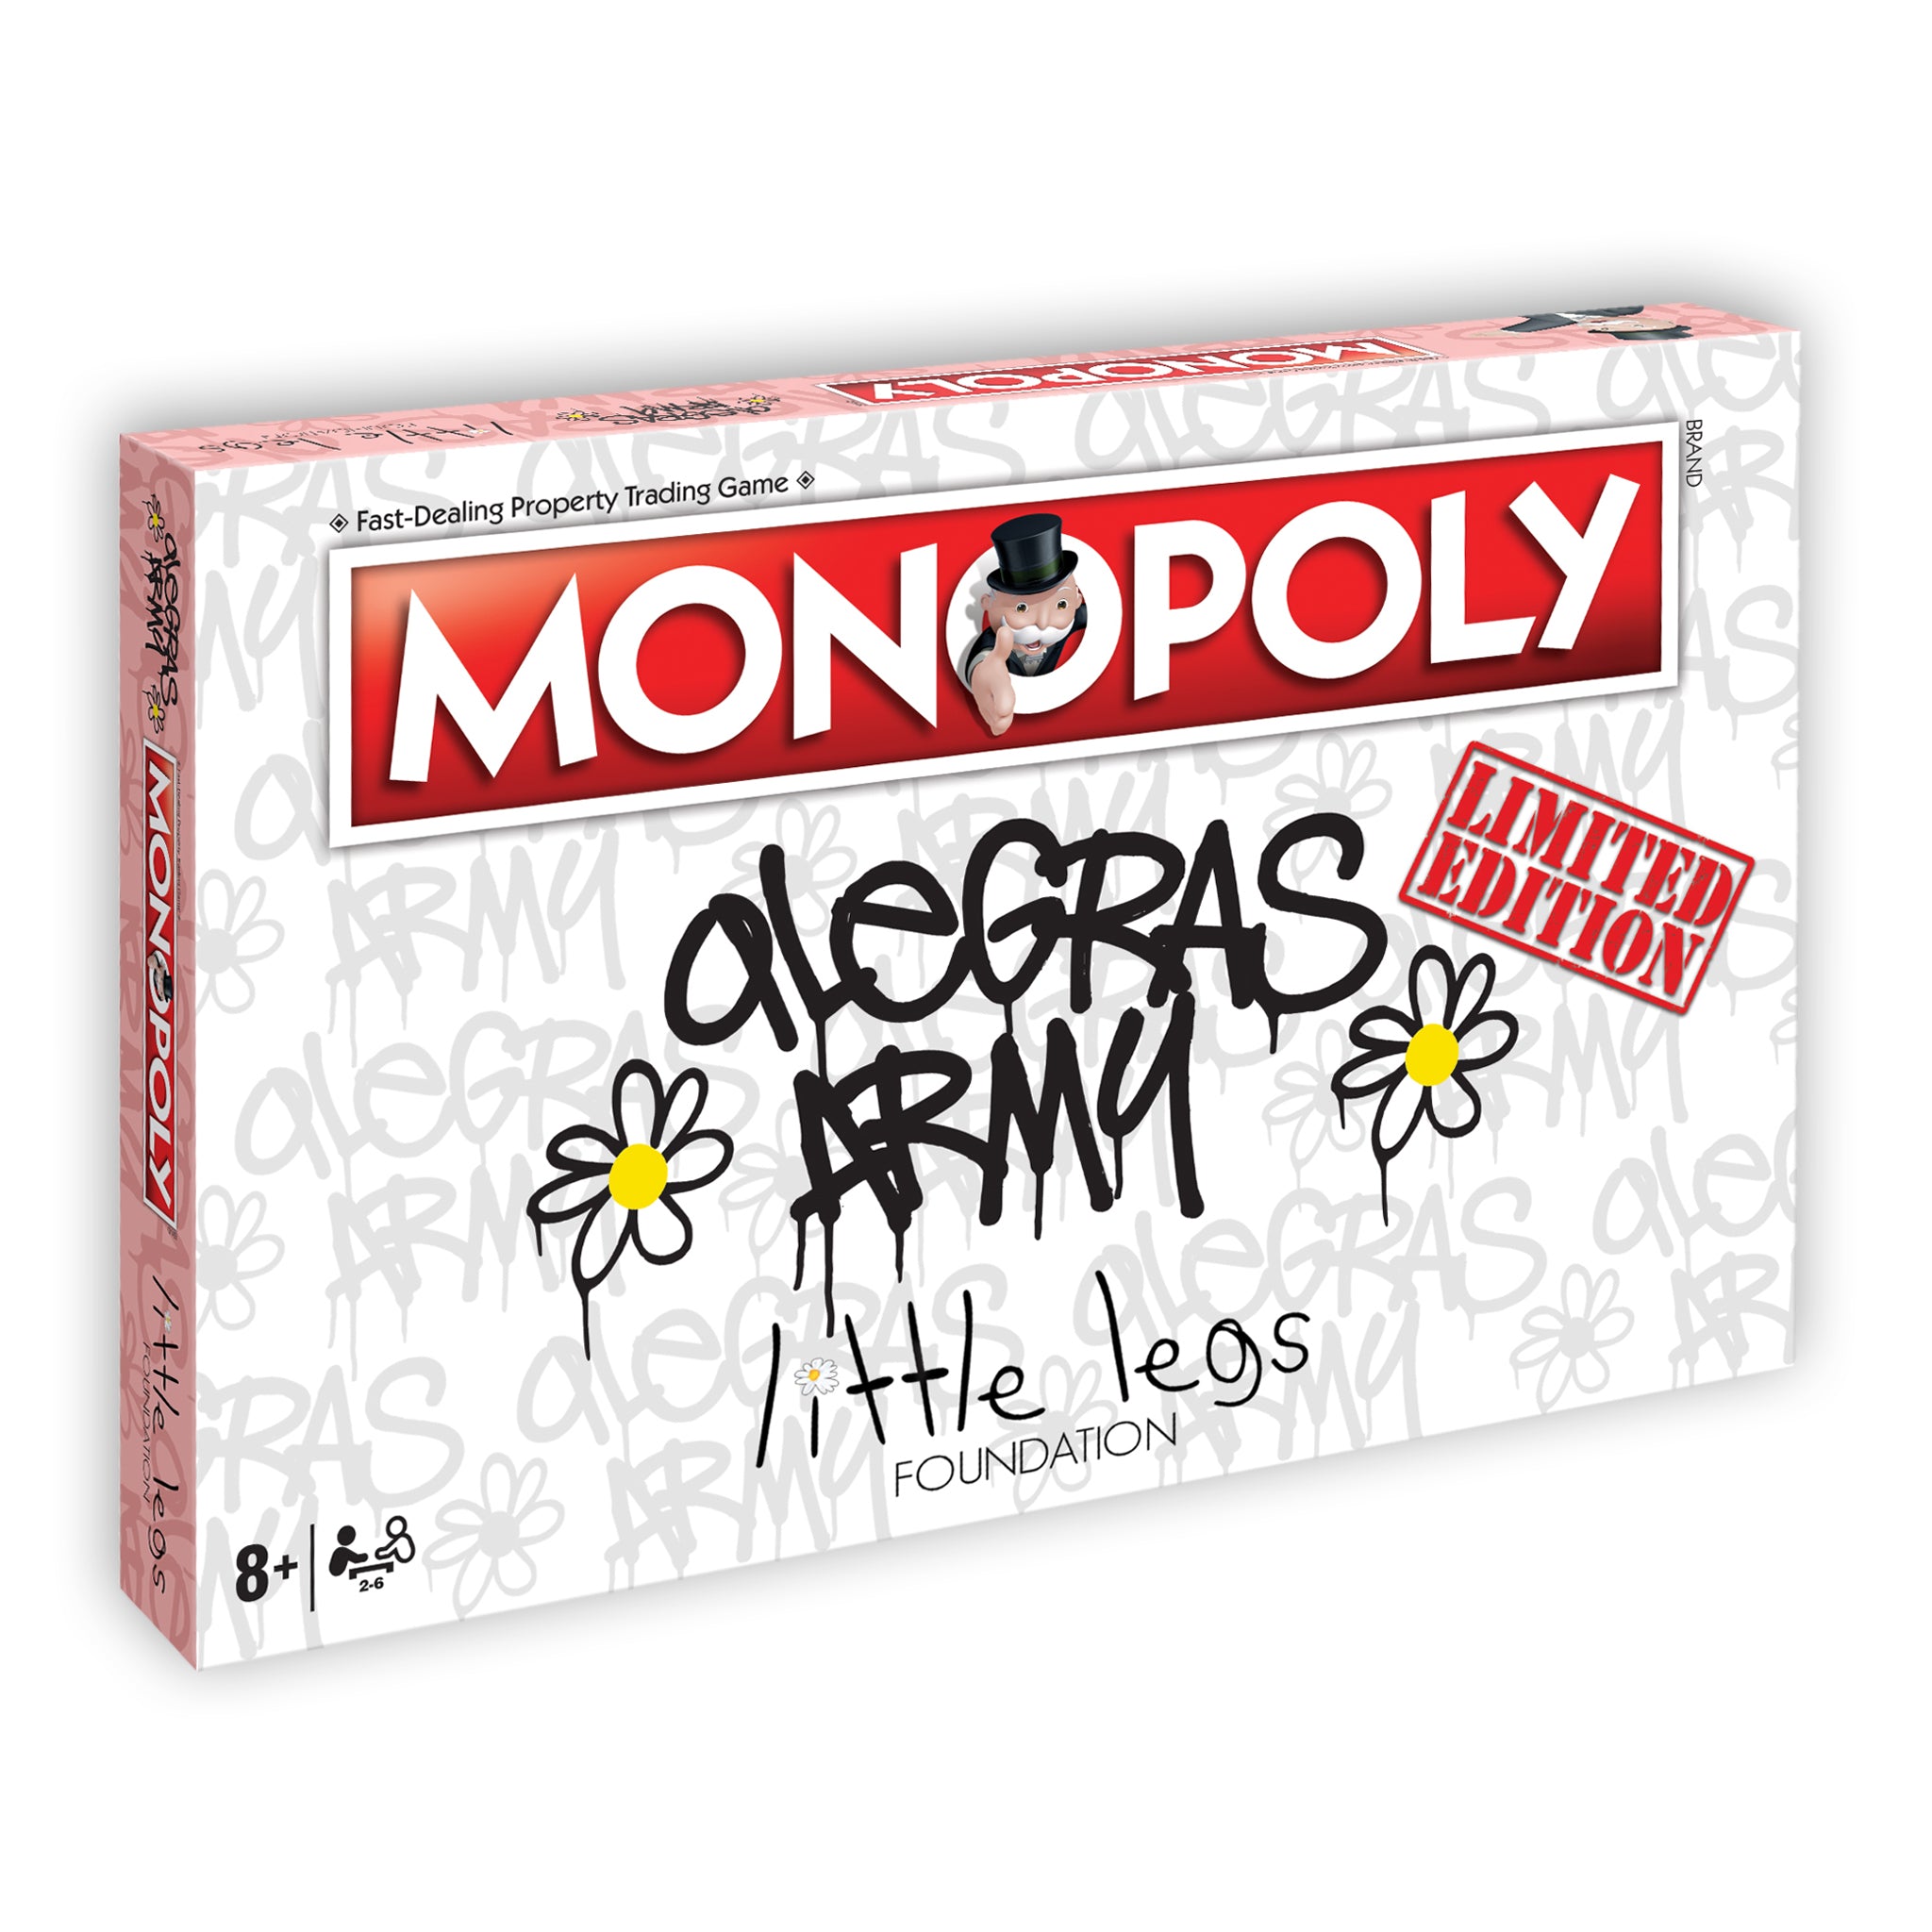 MONOPOLY - ALEGRA'S ARMY EDITION